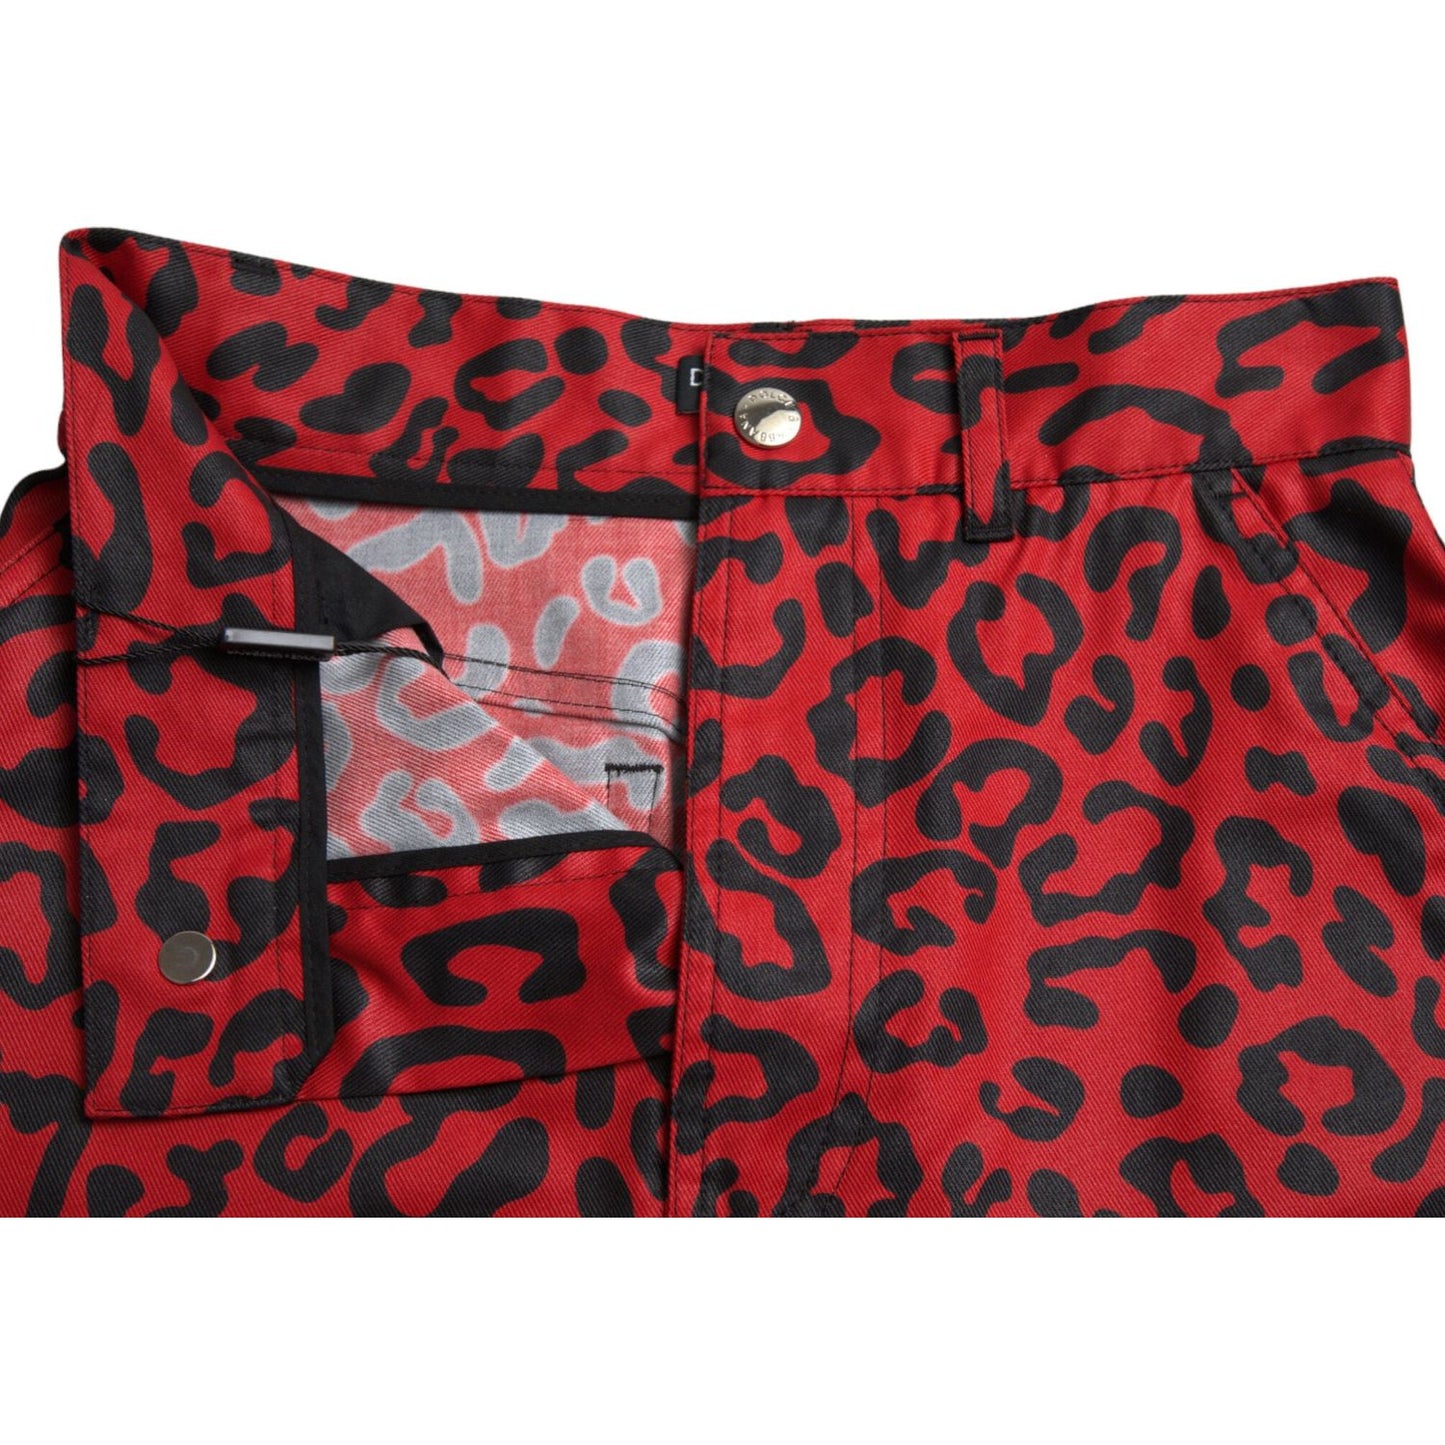 Dolce & Gabbana High Waist Red Leopard Mini Skirt red-leopard-print-cotton-high-waist-mini-skirt 465A1099-BG-scaled-a87e6676-4cb.jpg